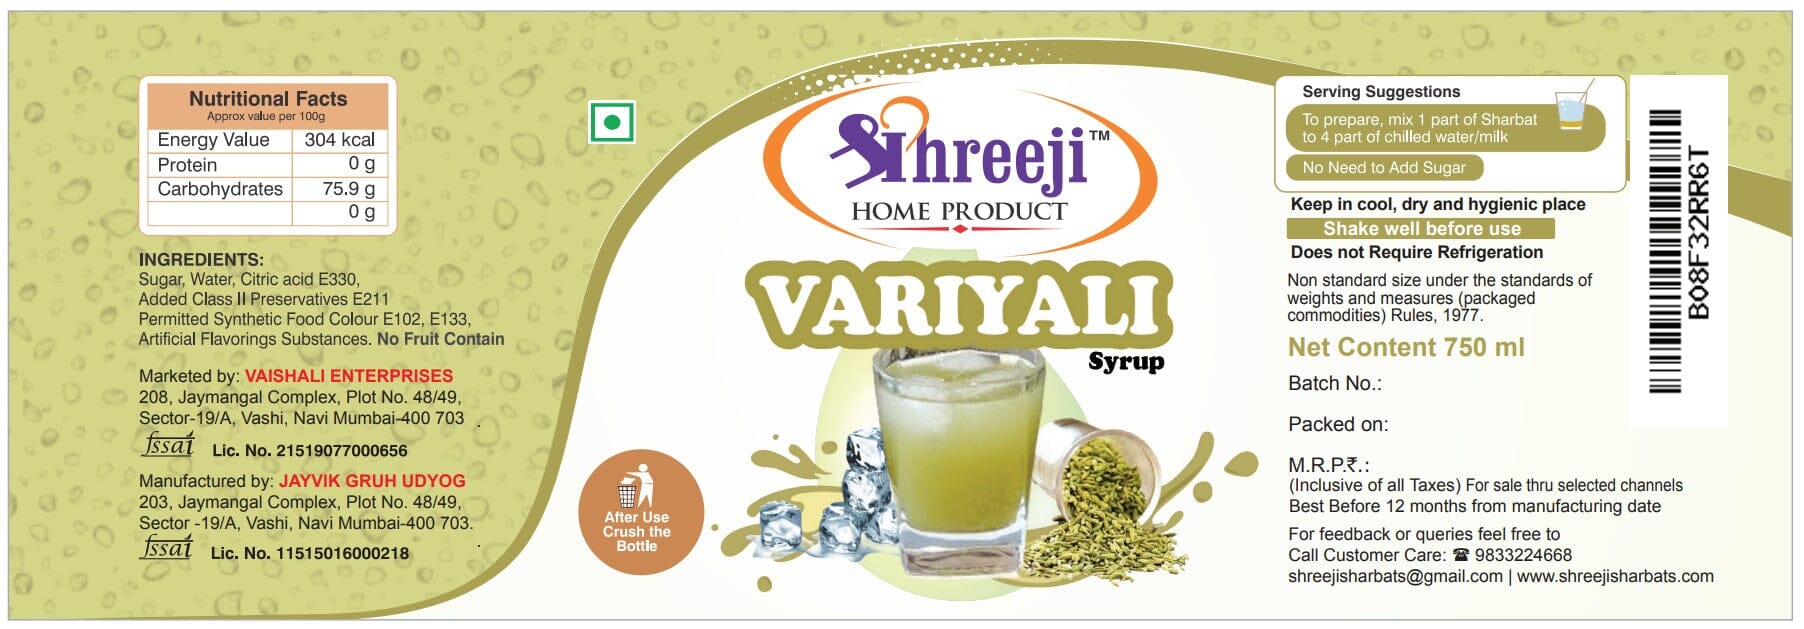 Shreeji Variali Syrup Mix with Water / Milk for Making Juice 750 ml Syrup Shreeji